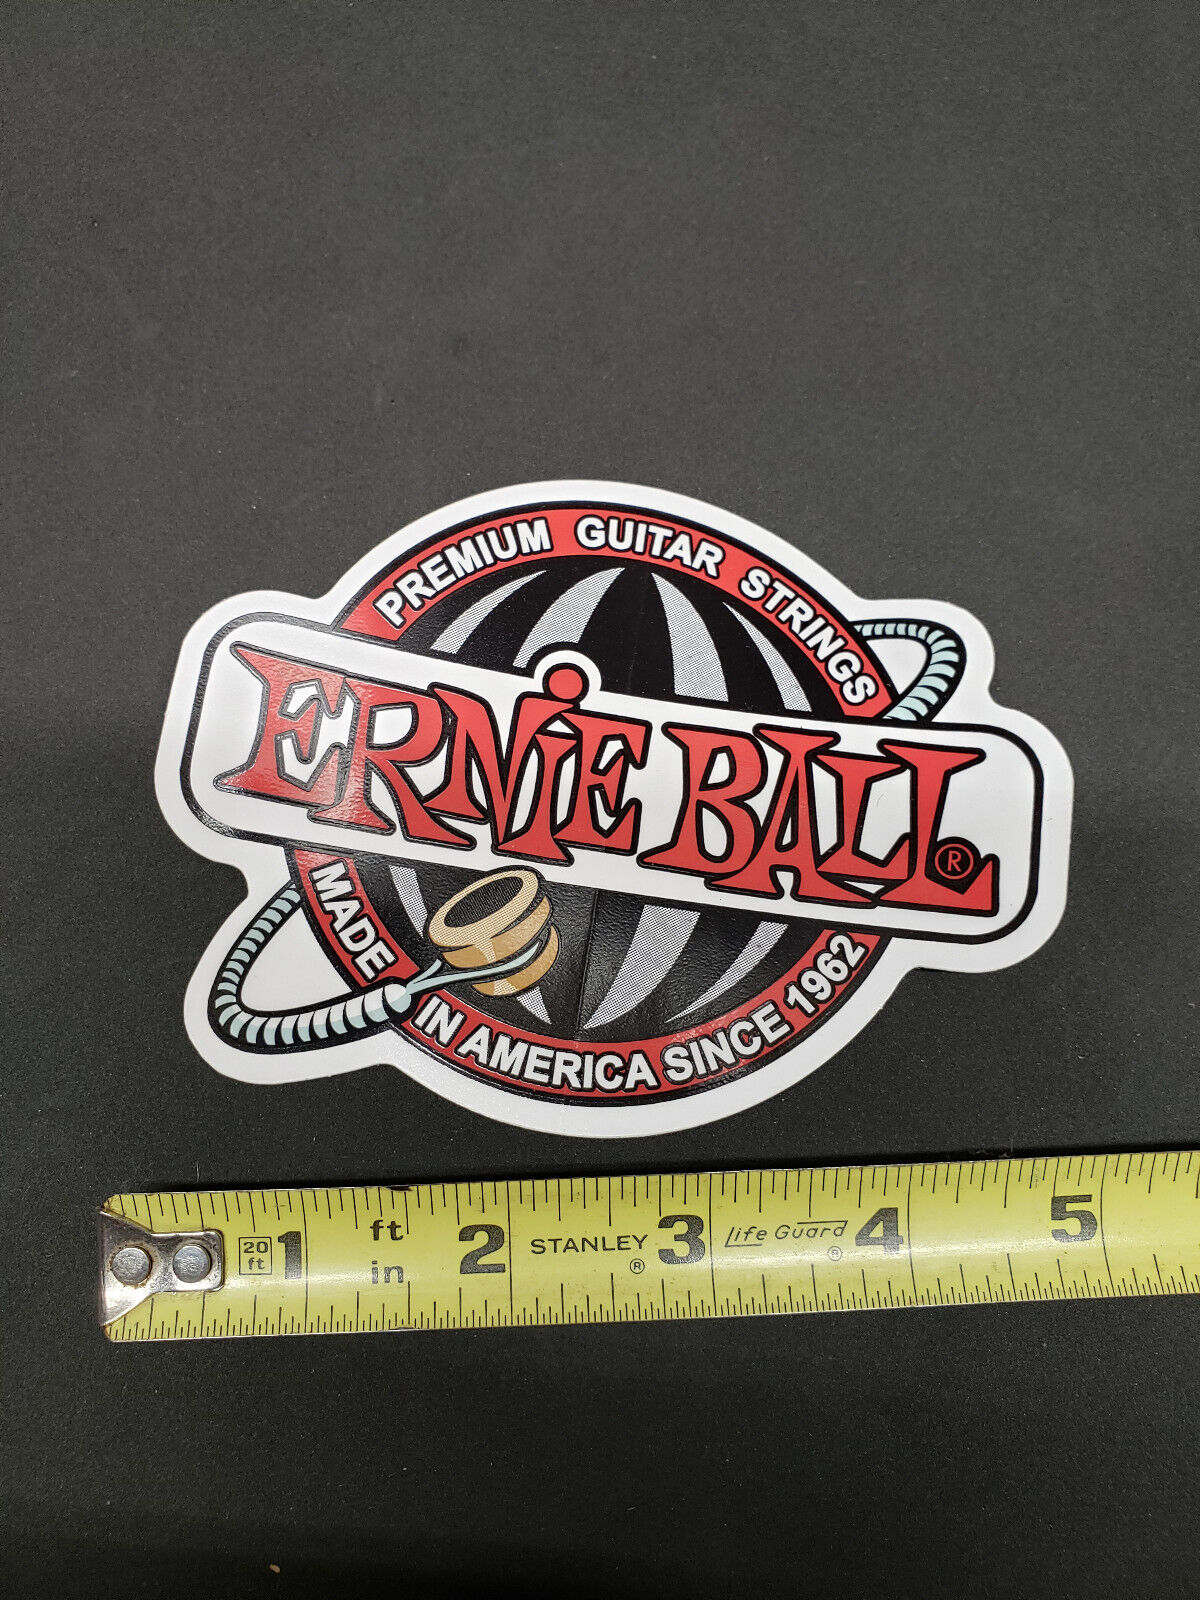 Ernie Ball Premium Guitar Strings Made in America Sticker